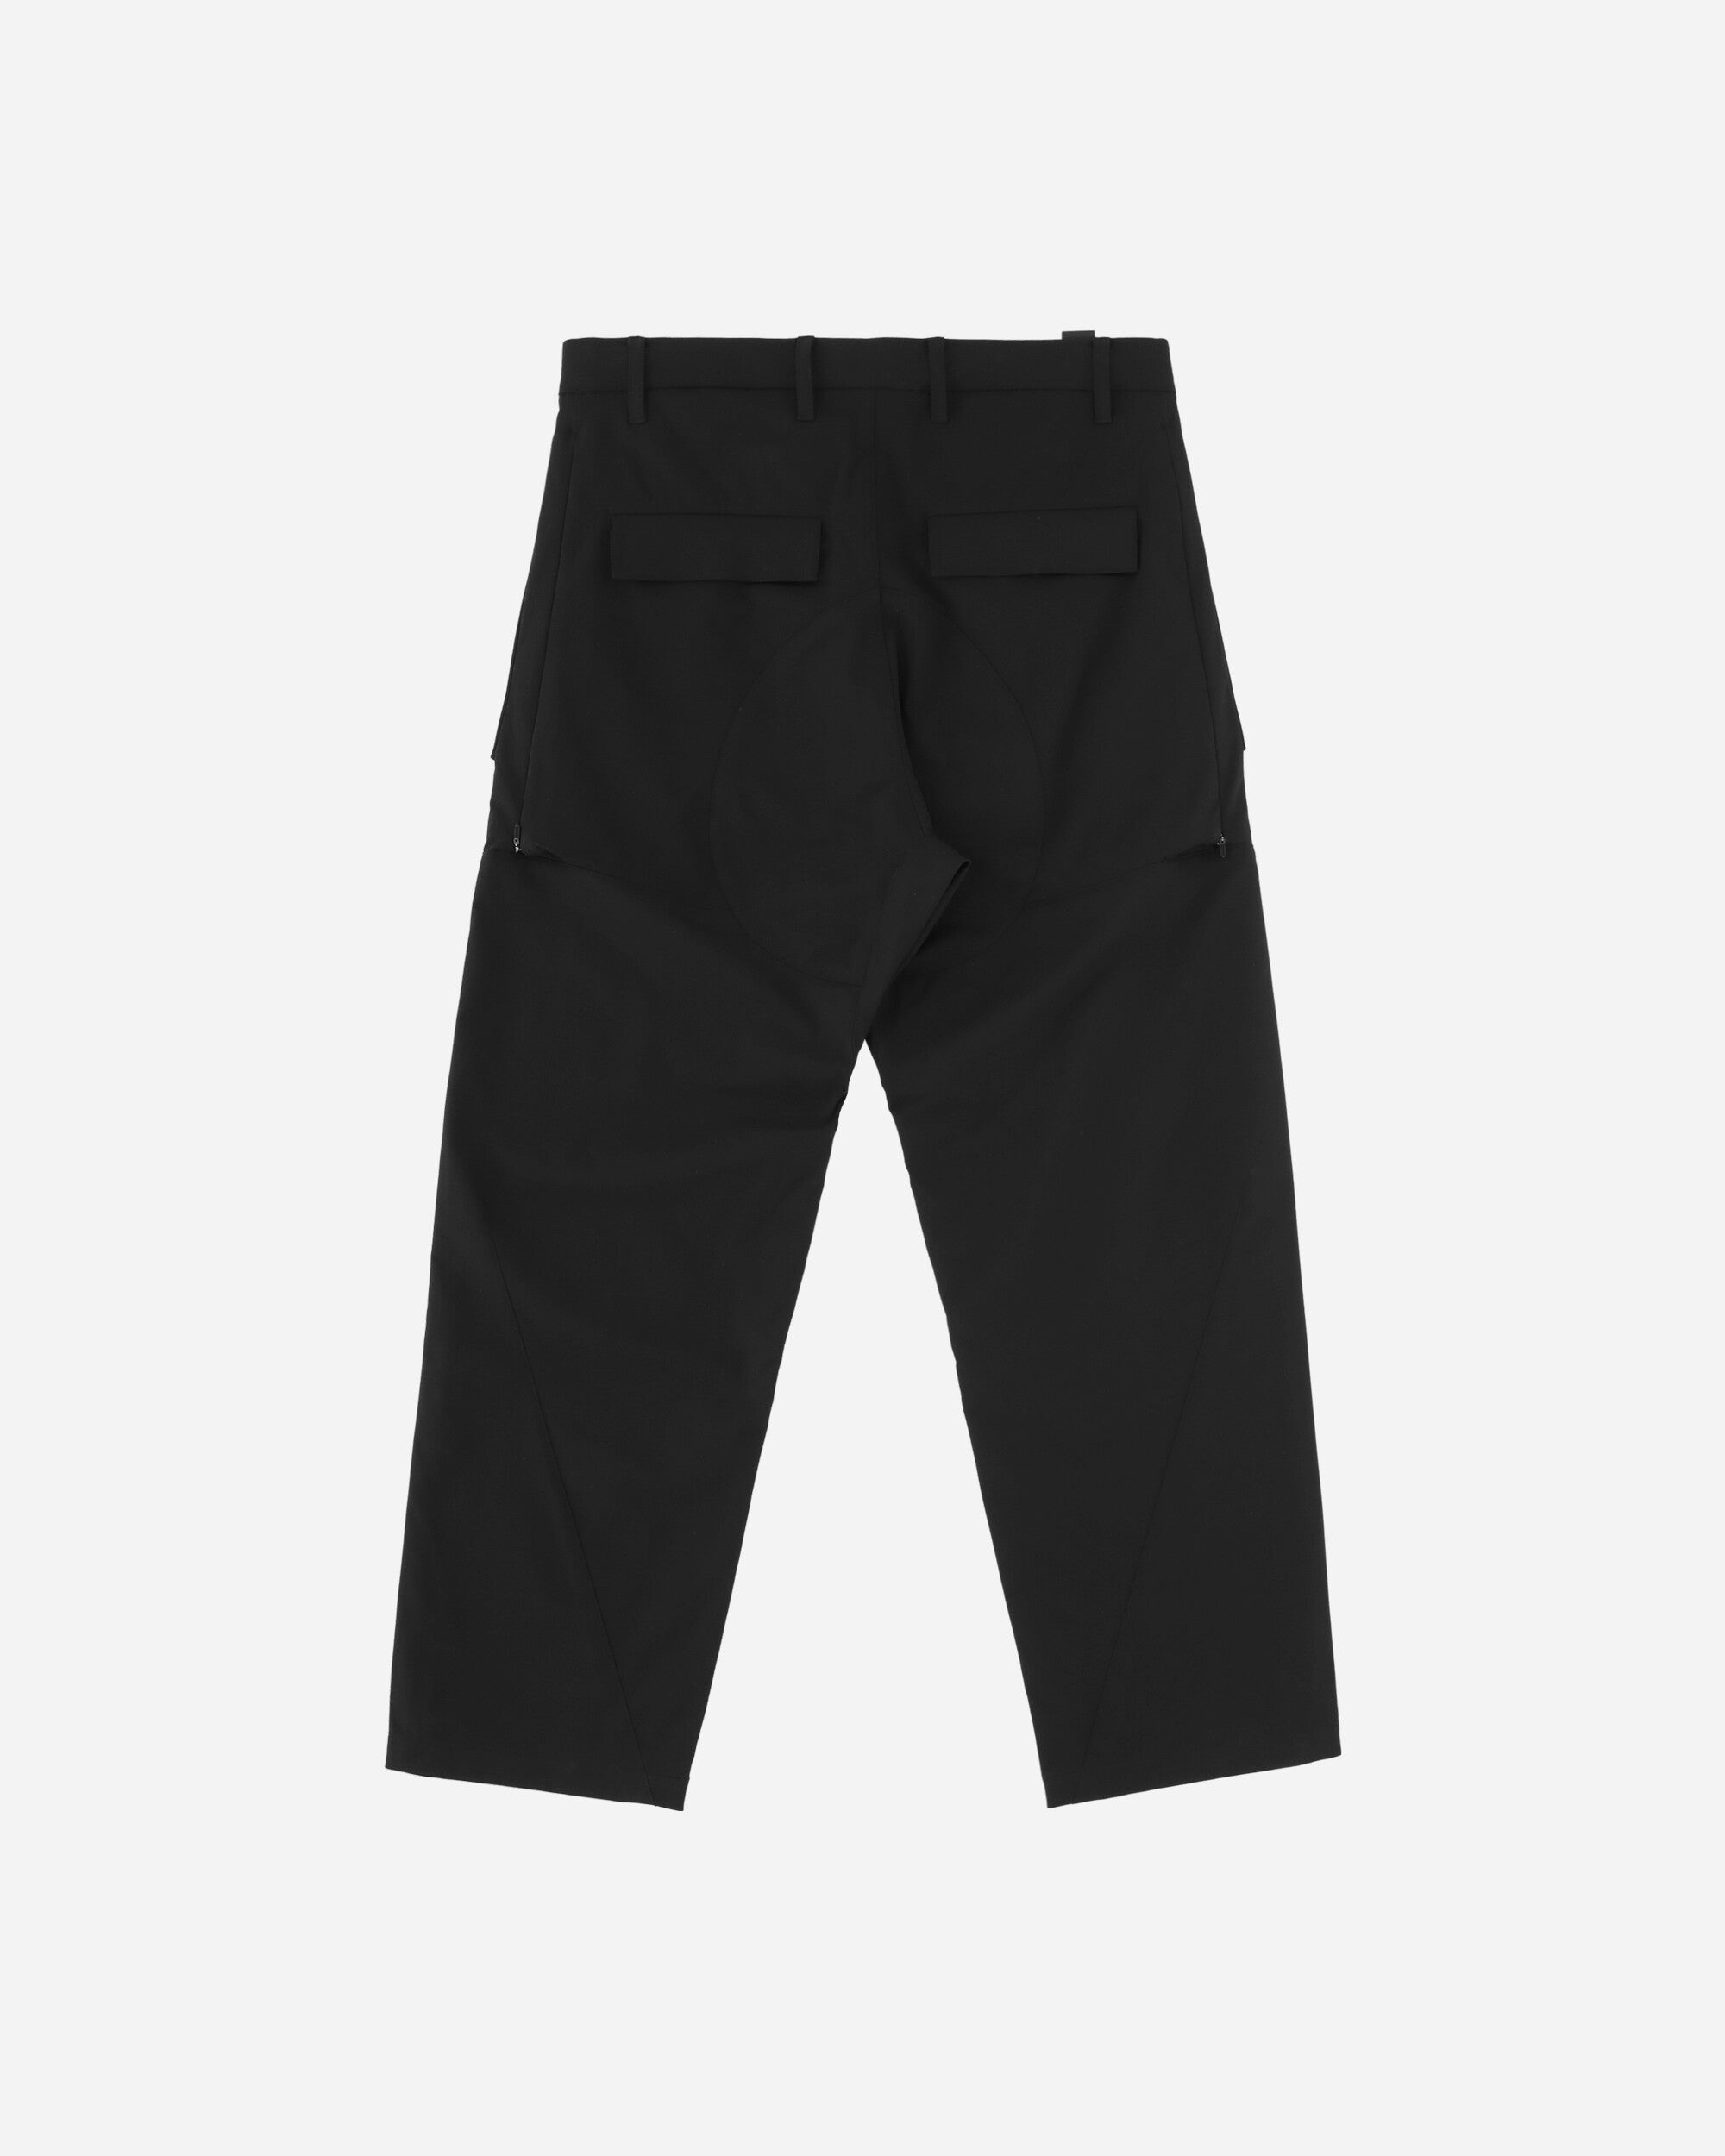 Schoeller® Dryskin Vent Pants Black - 2